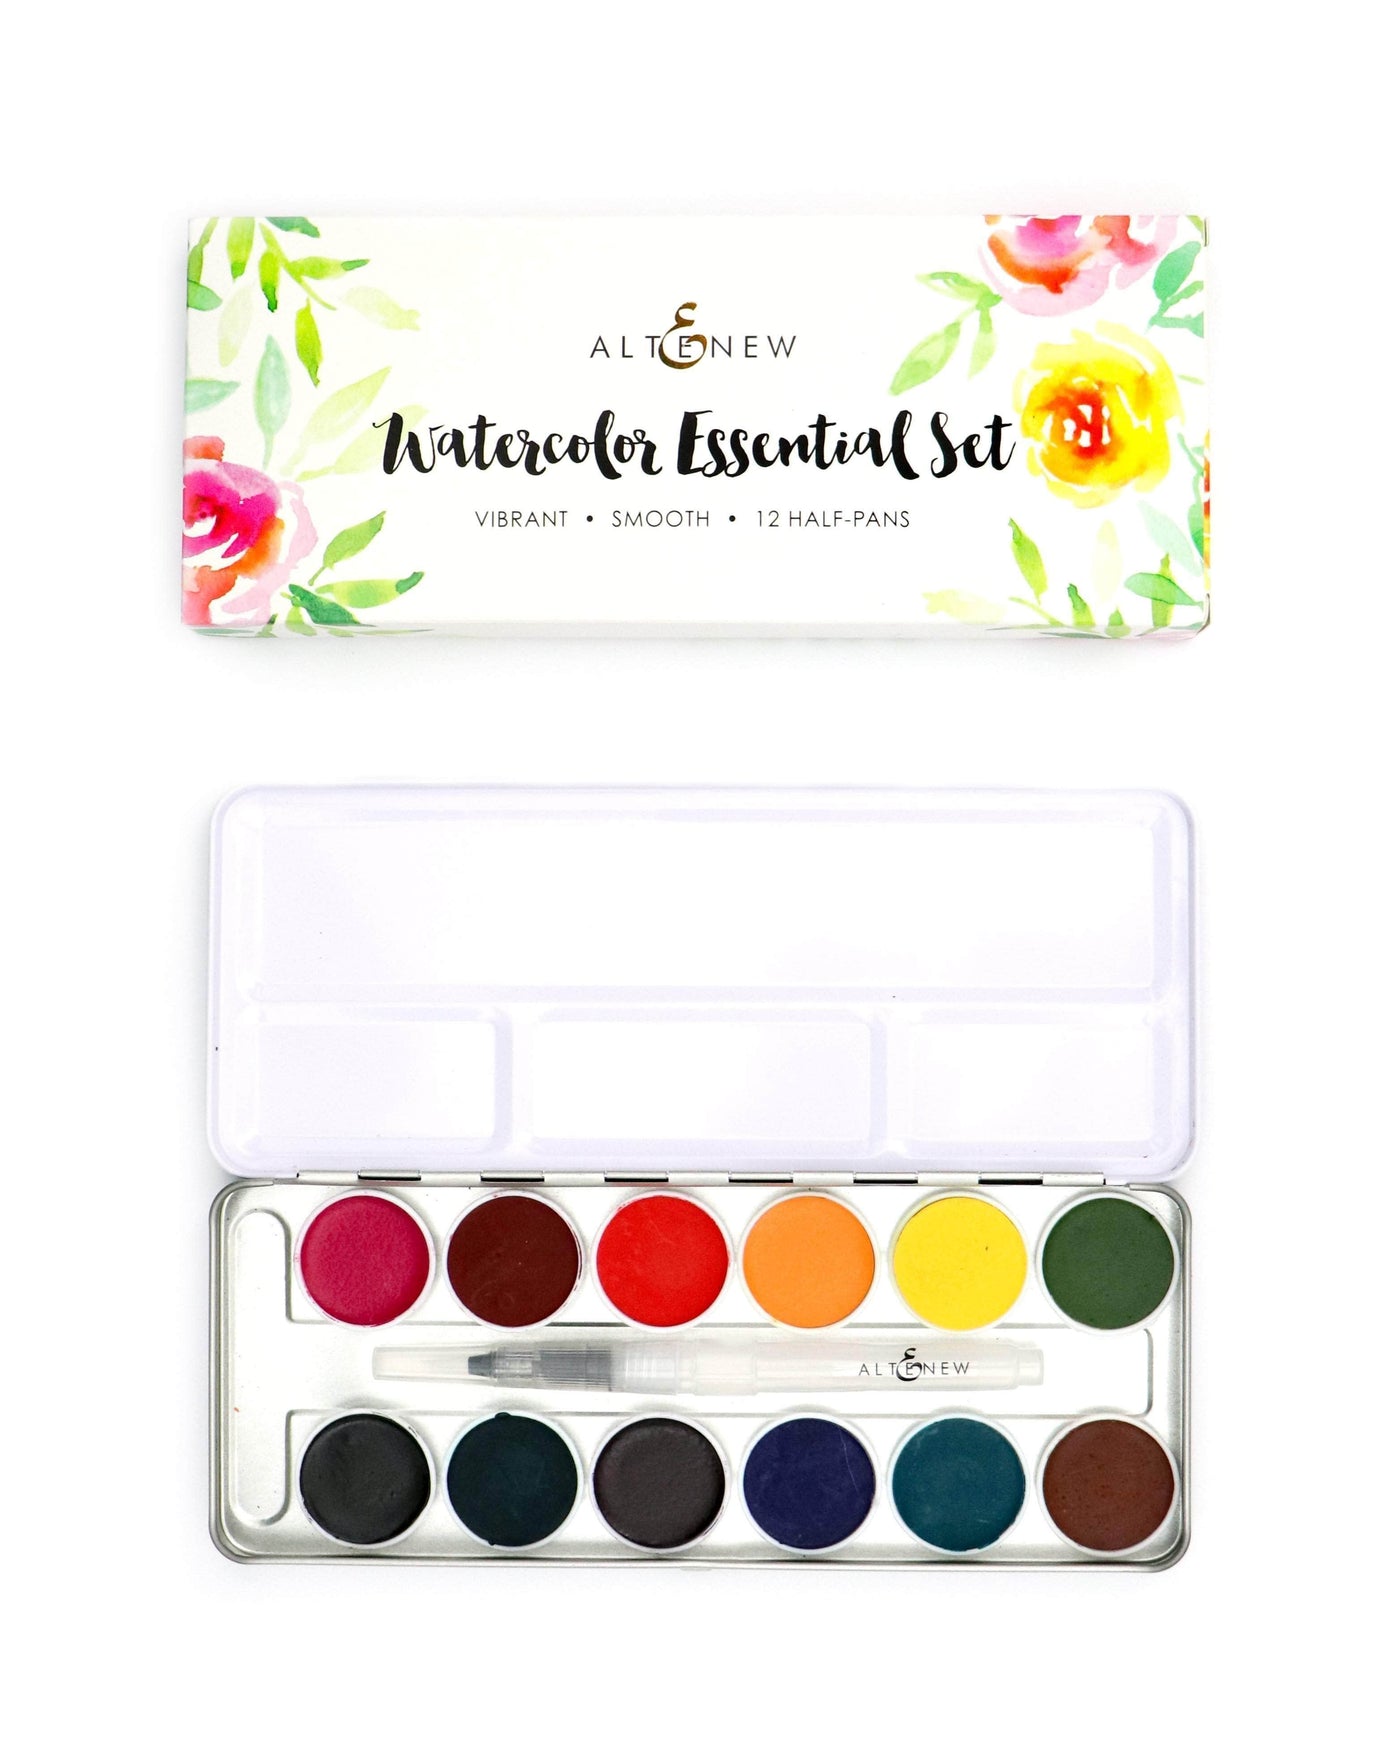 Altenew Stamp & Watercolor Bundle Paint-A-Flower: White Swan Echinacea & Watercolor Essential 12 Pan Set Bundle